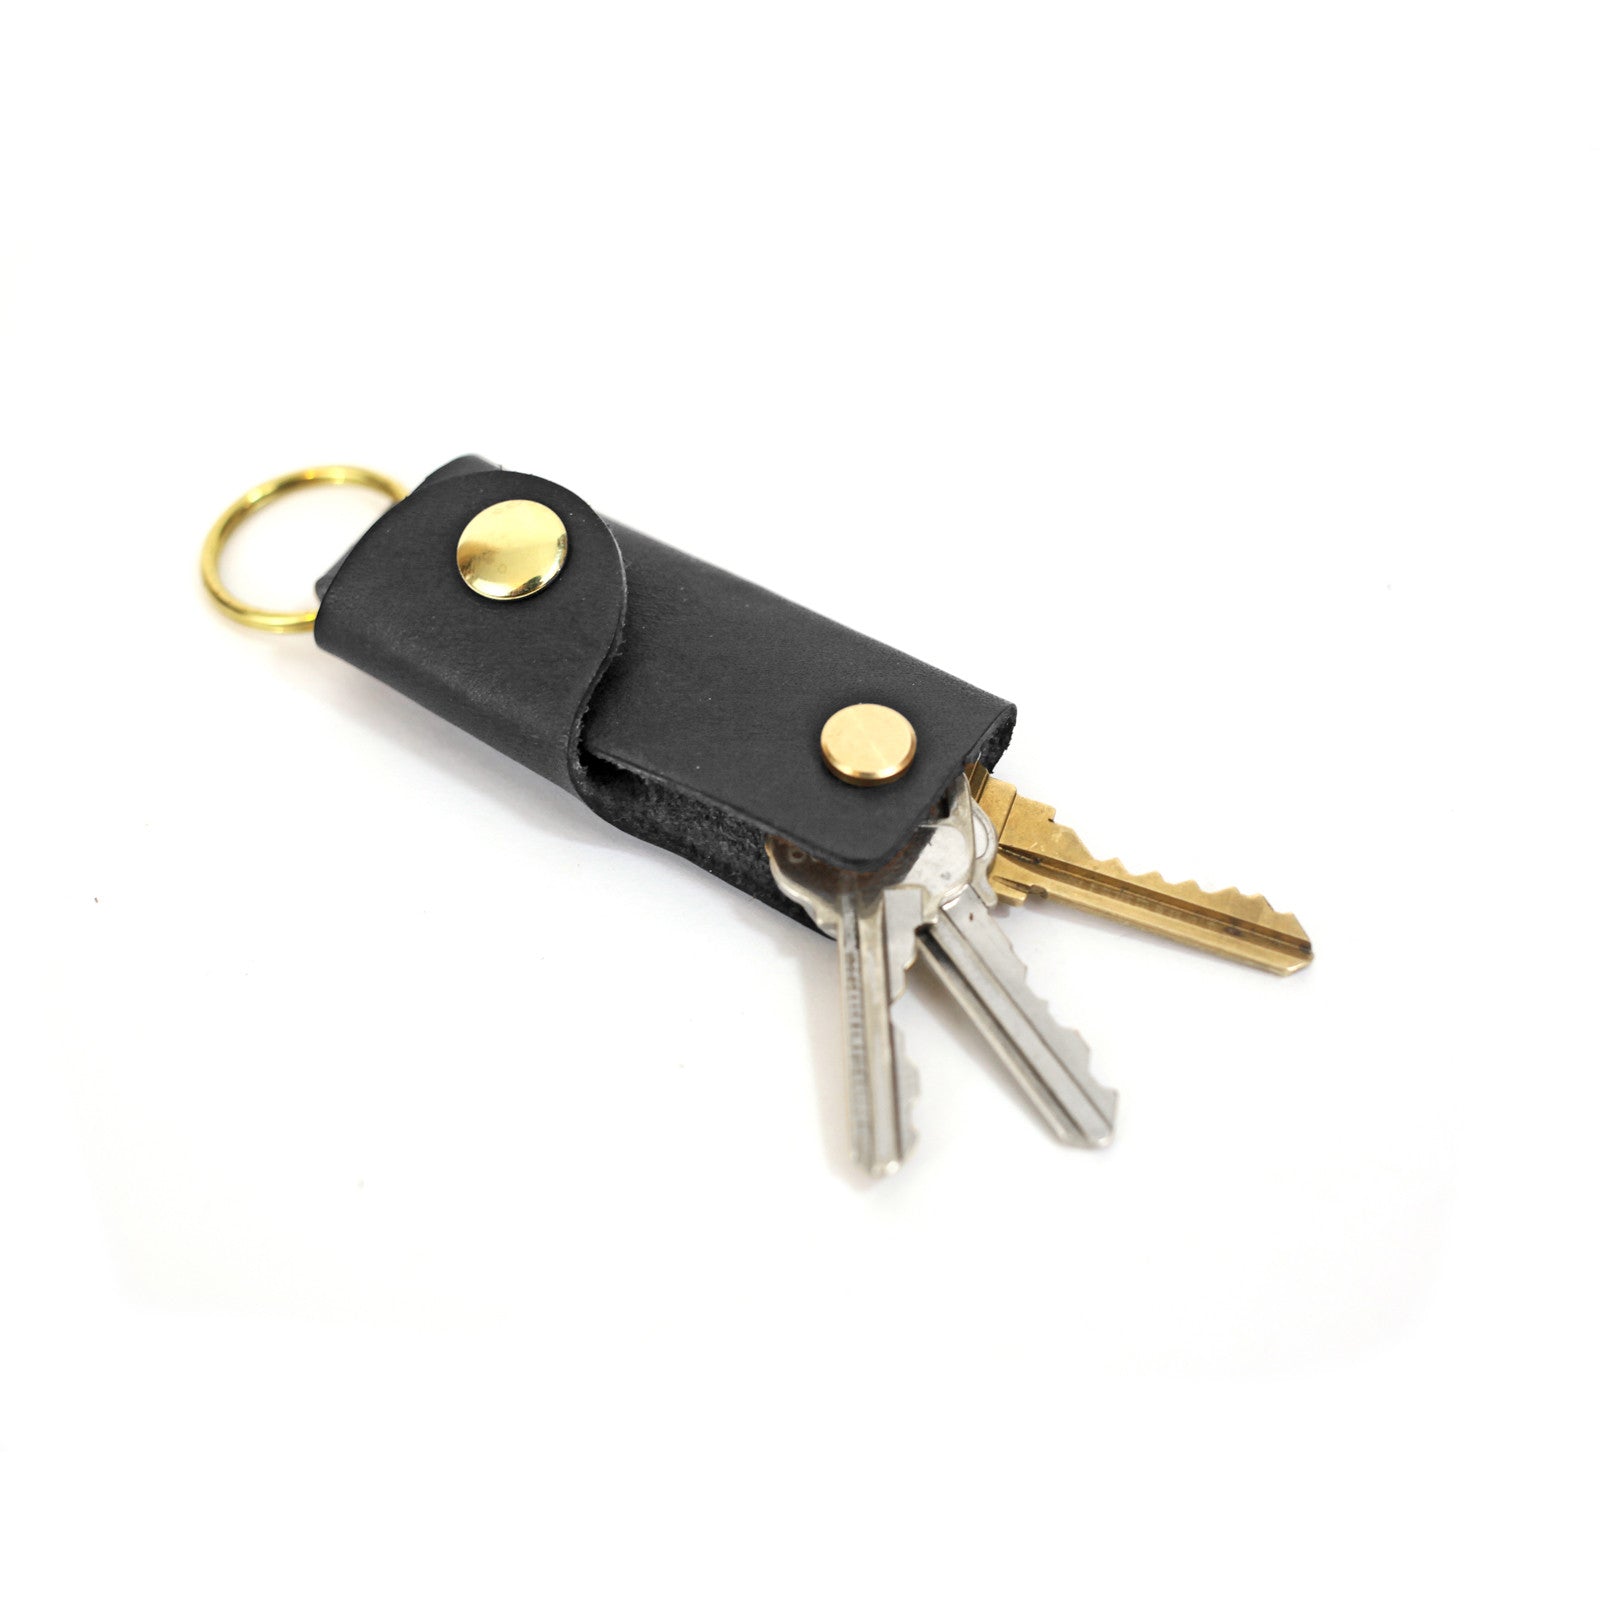 KJworkshopCanada Little Cloud Keychains, Adorable, Cute Keychain for Car Keys, House Keys, Office Keys